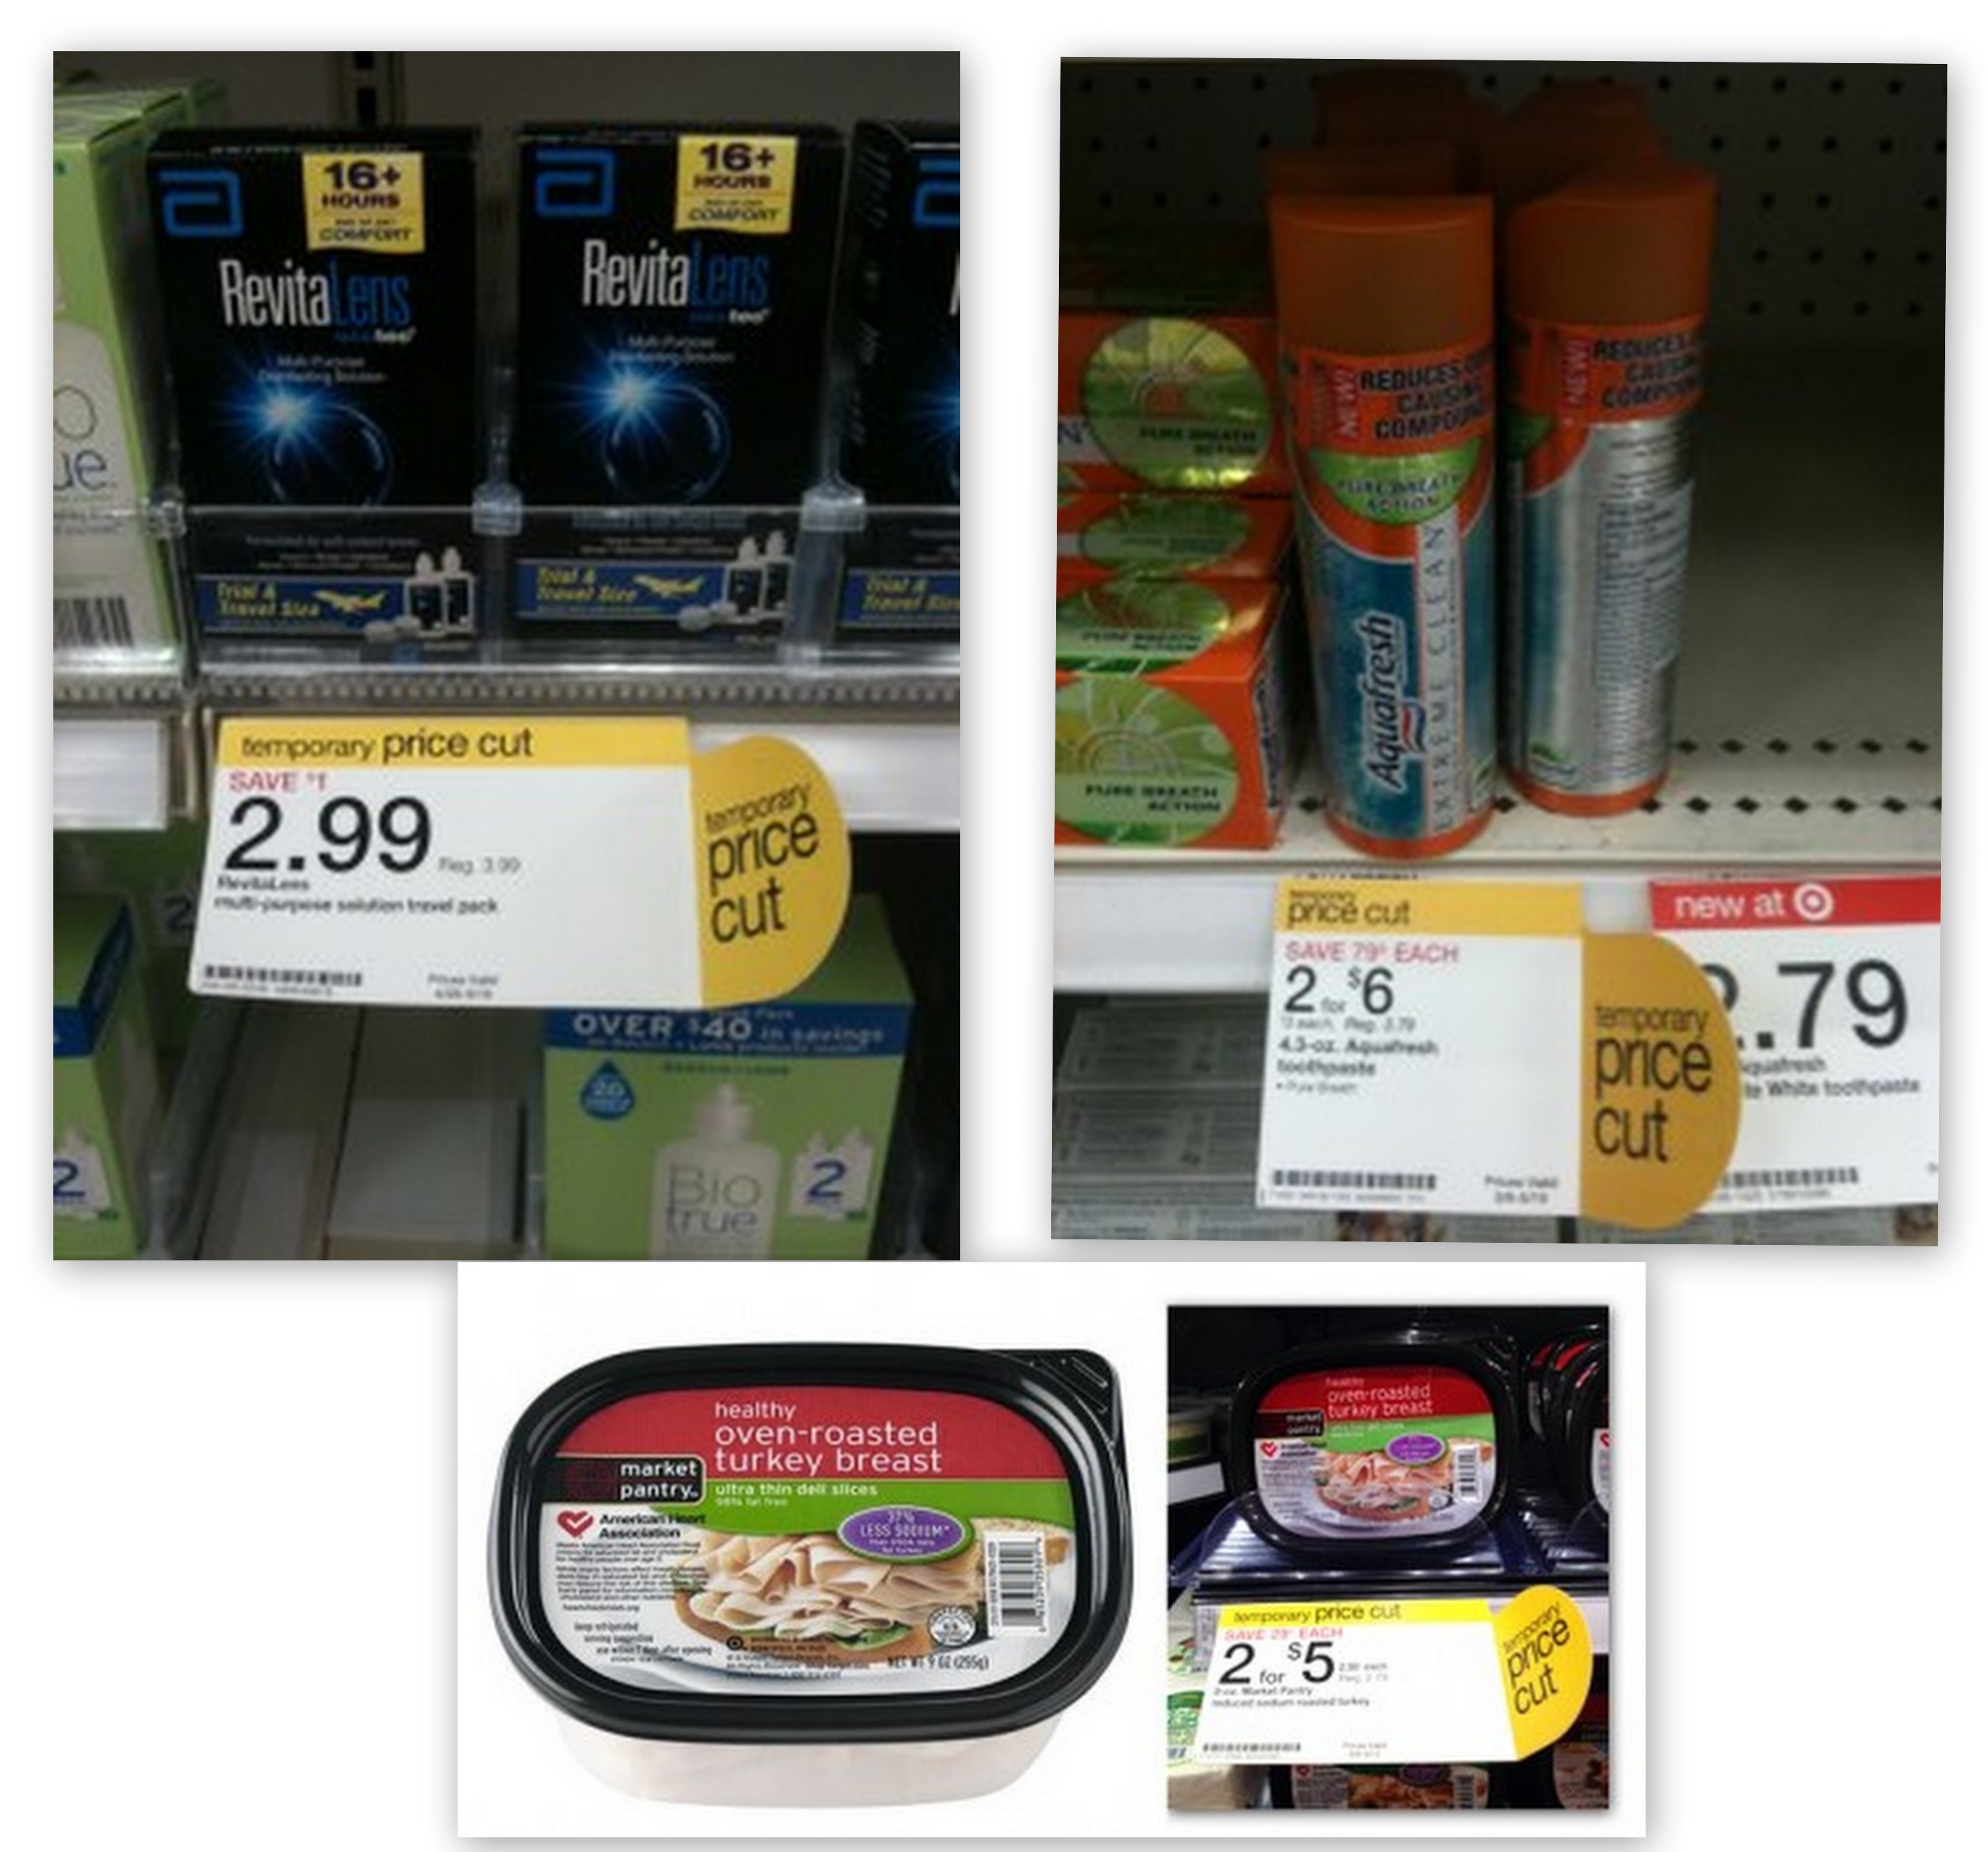 Target: Deals on Aquafresh, Revitalens, Market Pantry Lunch Meat and Garnier Moisture Cream!